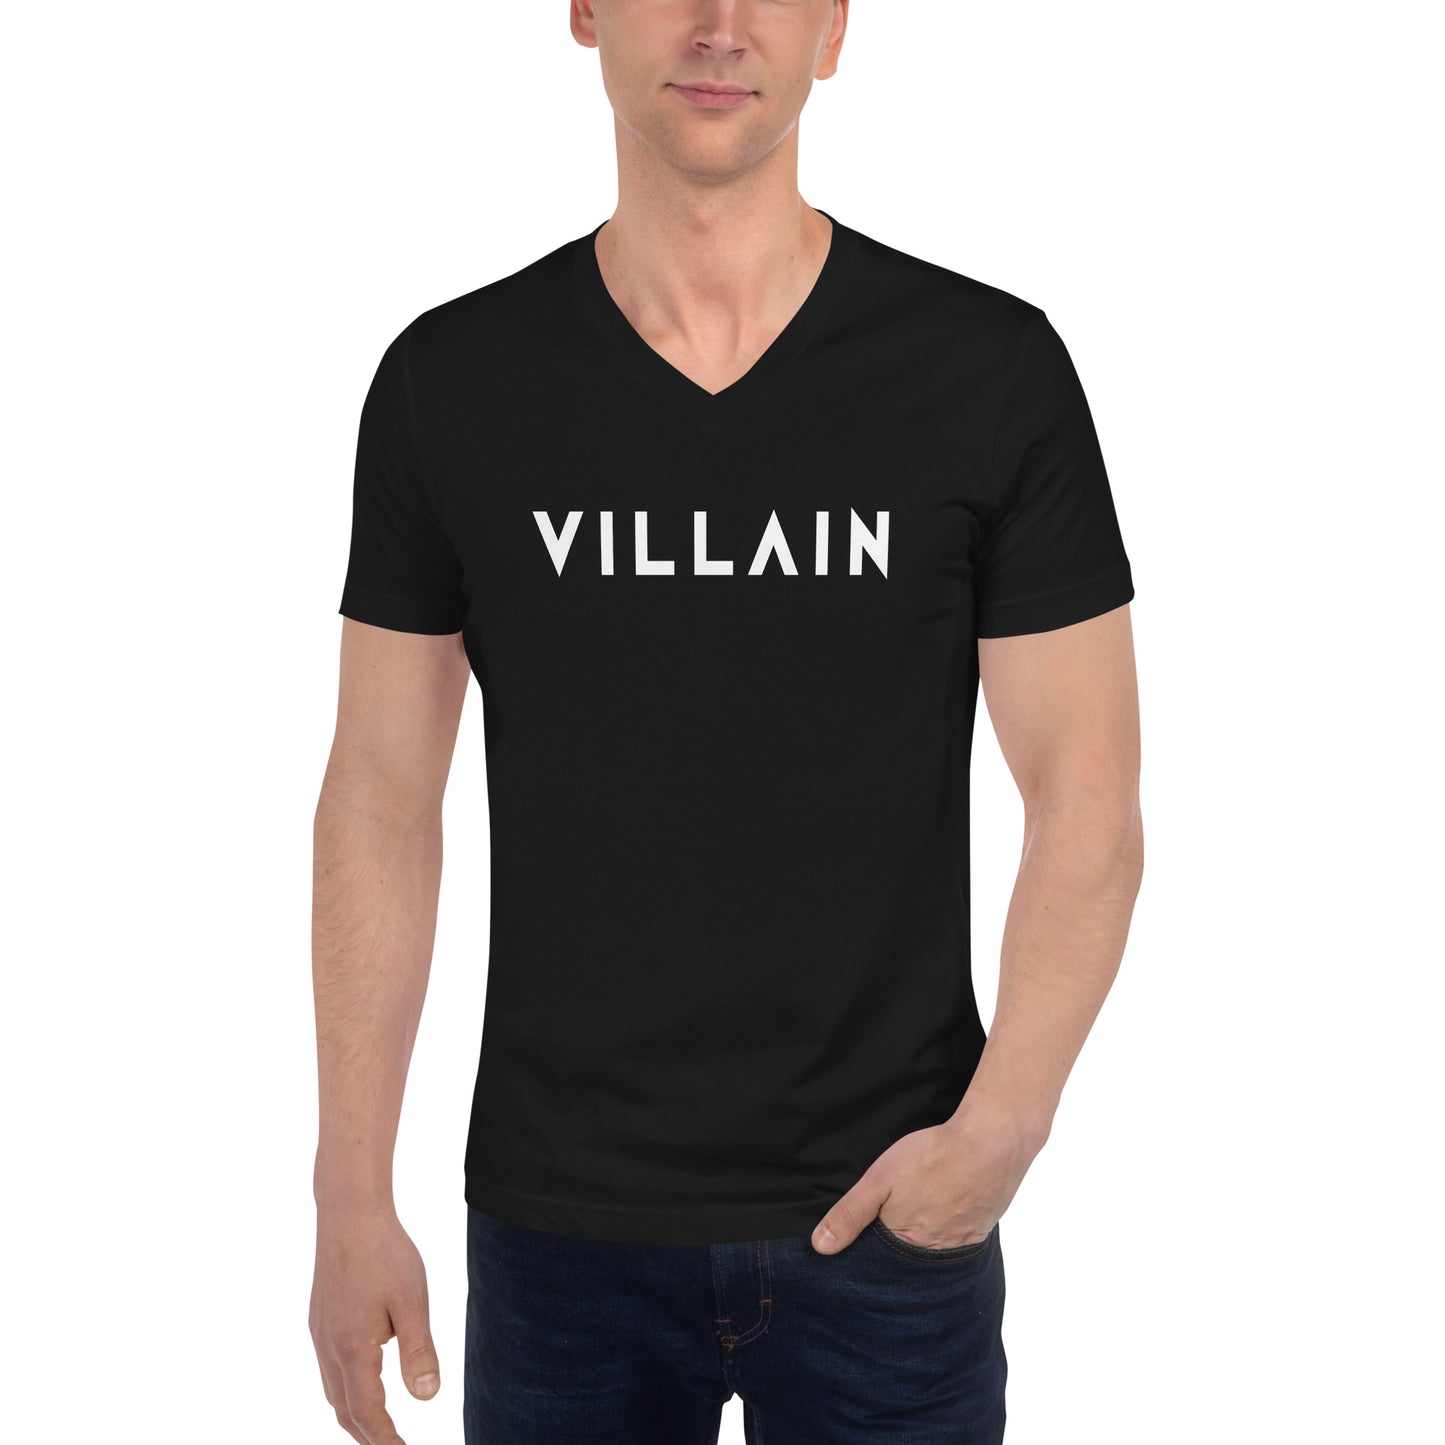 Villain Unisex Short Sleeve V-Neck T-Shirt - BLK